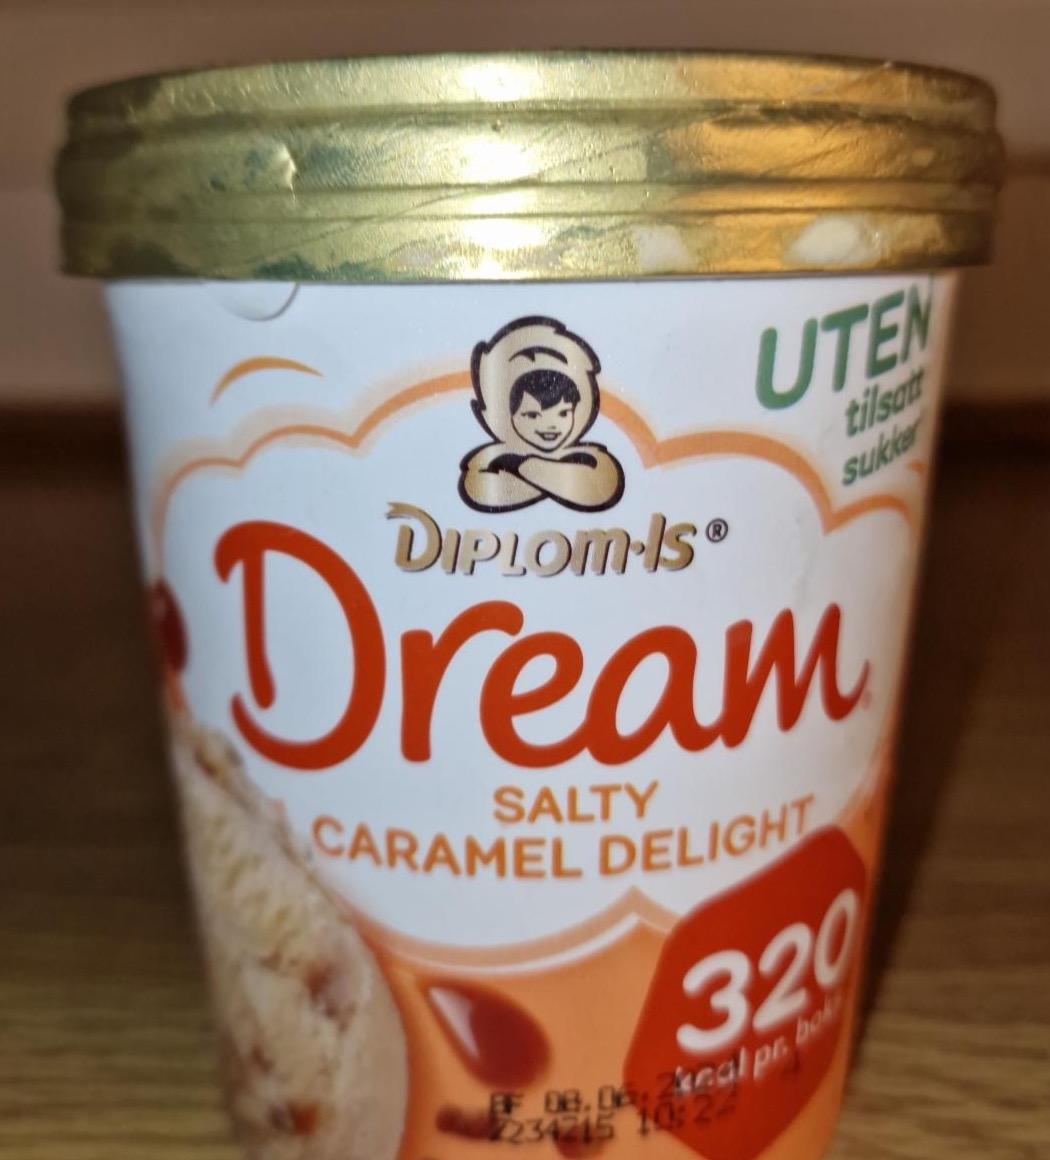 Képek - Dream Salty caramel delight Diplom-is